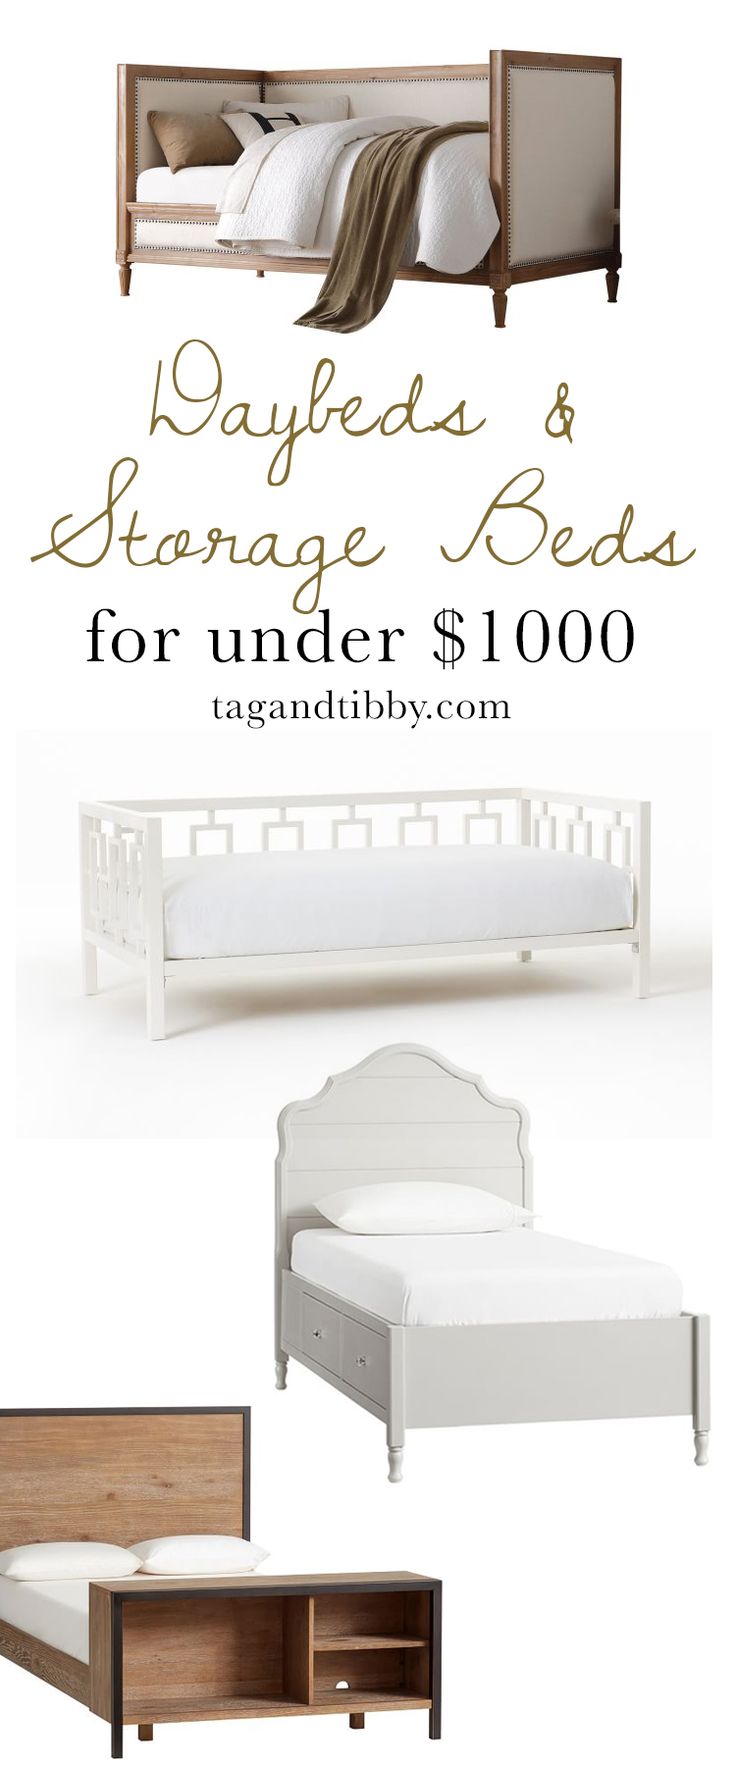 Daybeds & Storage Beds for Tweens priced under $1k